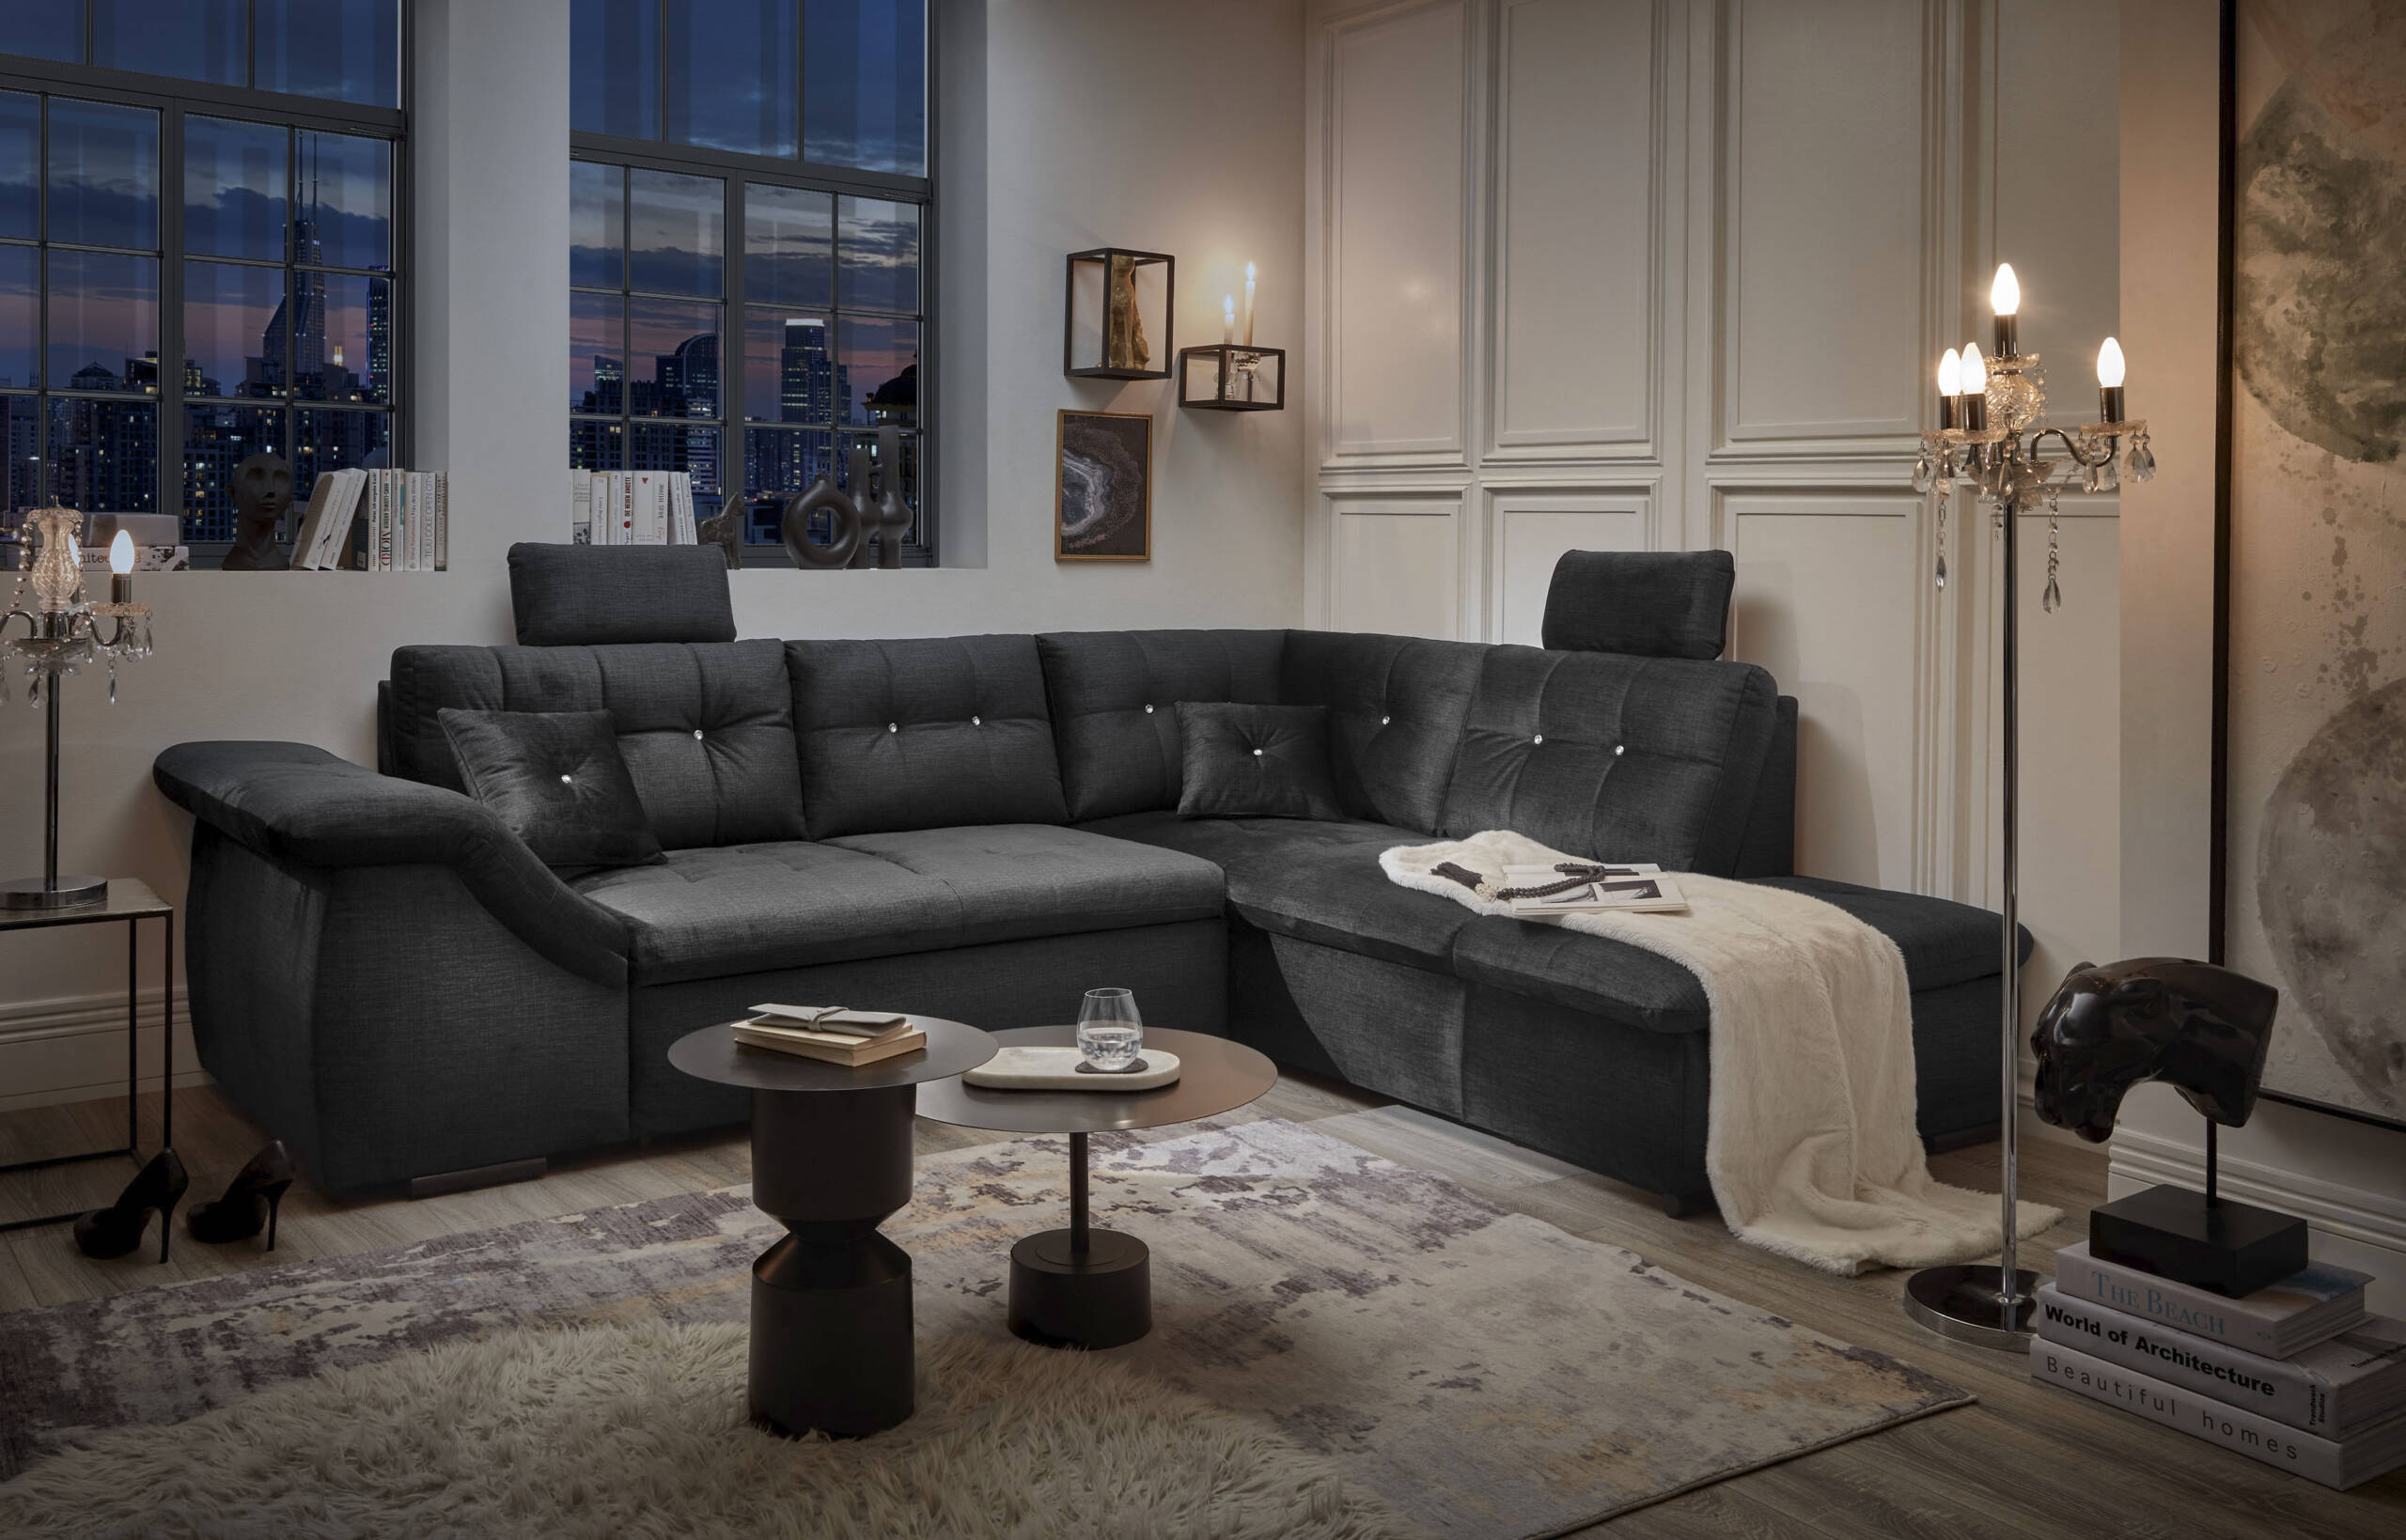 | ausziehbar Couch stylesoul Sale | Outlet -70% bis